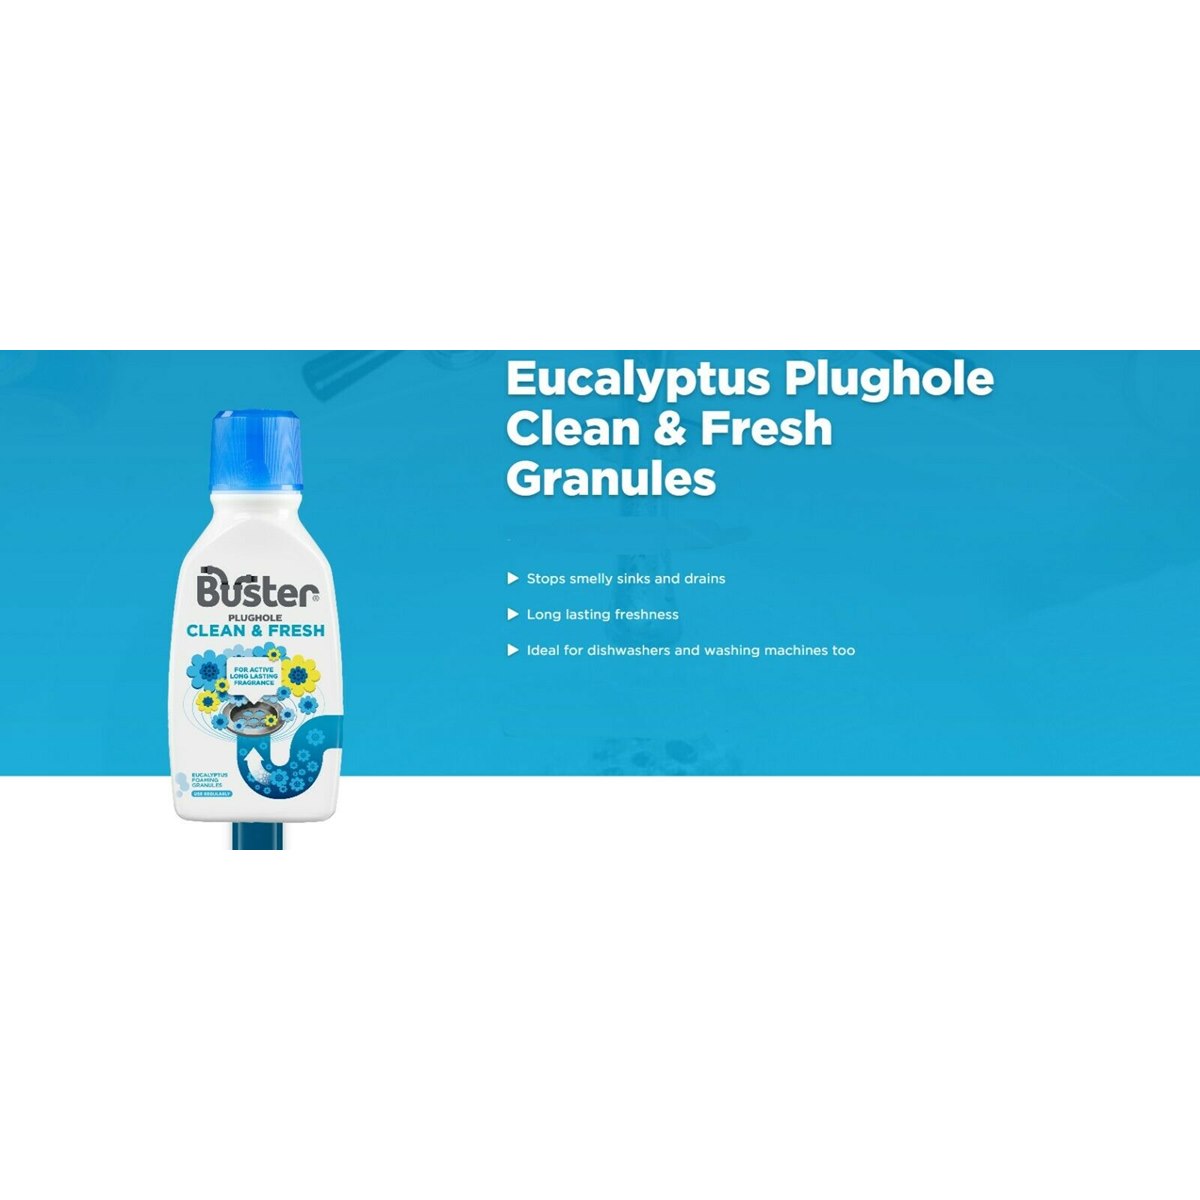 Eucalyptus Plughole Clean and Fresh Granules